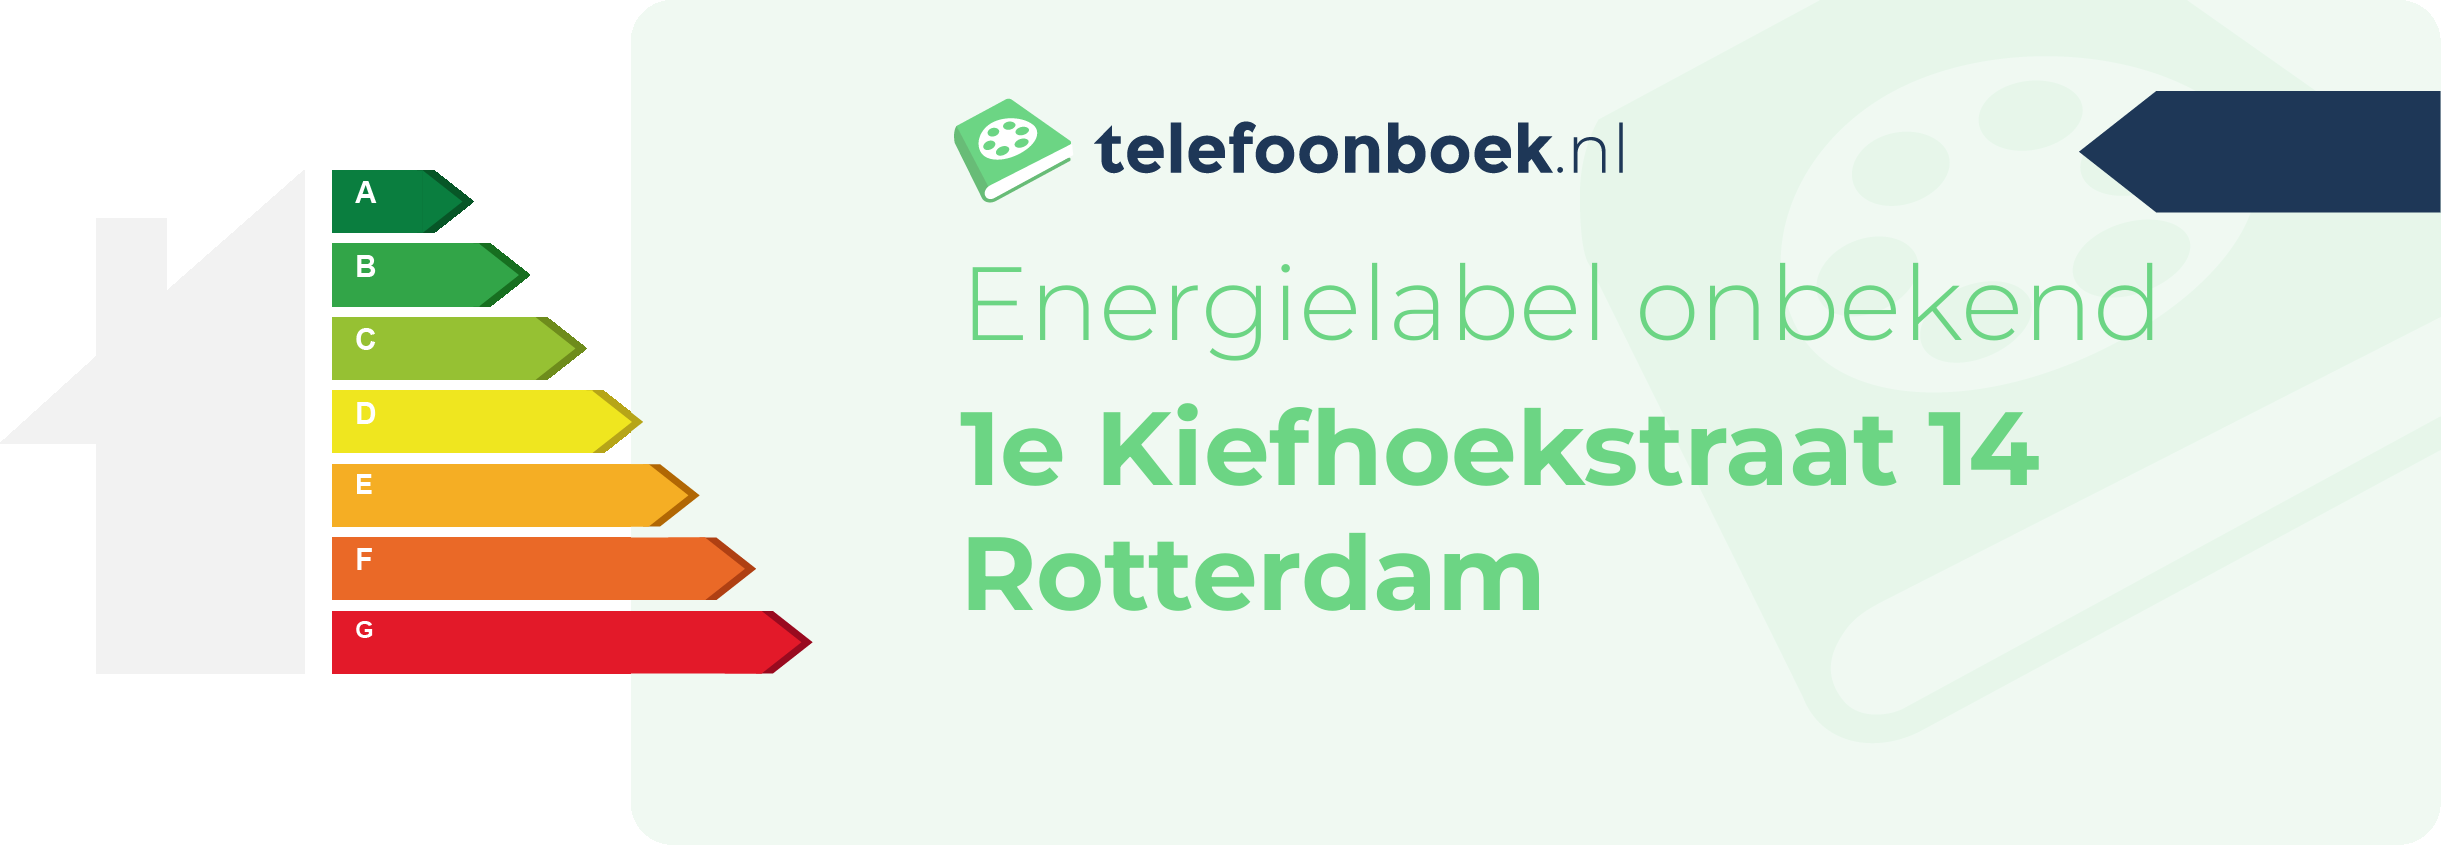 Energielabel 1e Kiefhoekstraat 14 Rotterdam